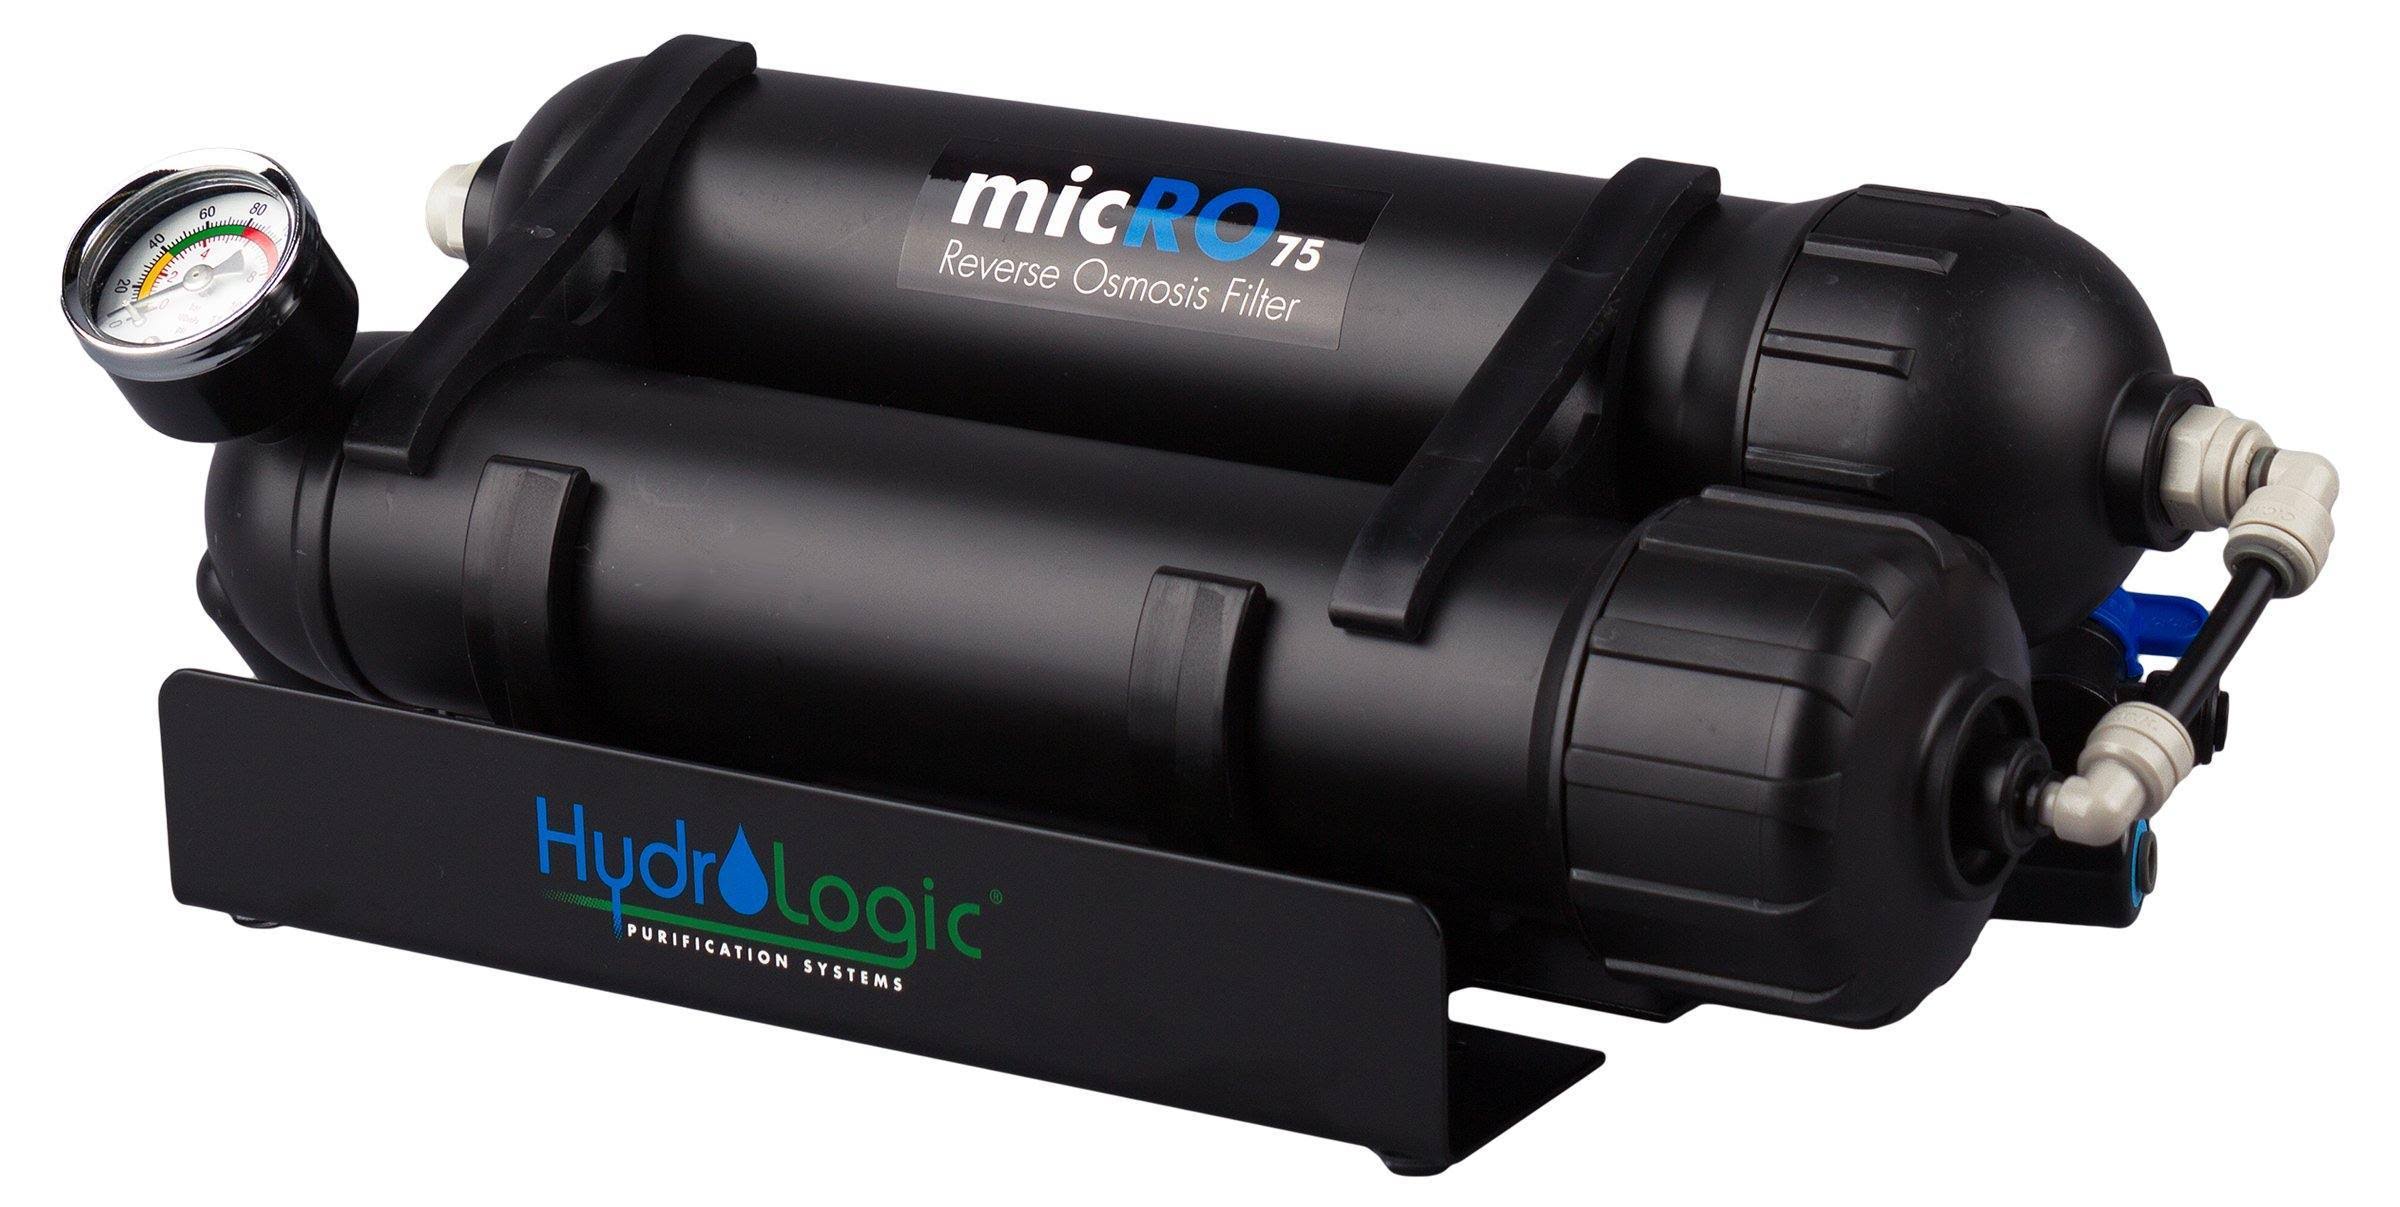 Hydro-Logic Compact Portable Reverse Osmosis Filter - 75 GPD